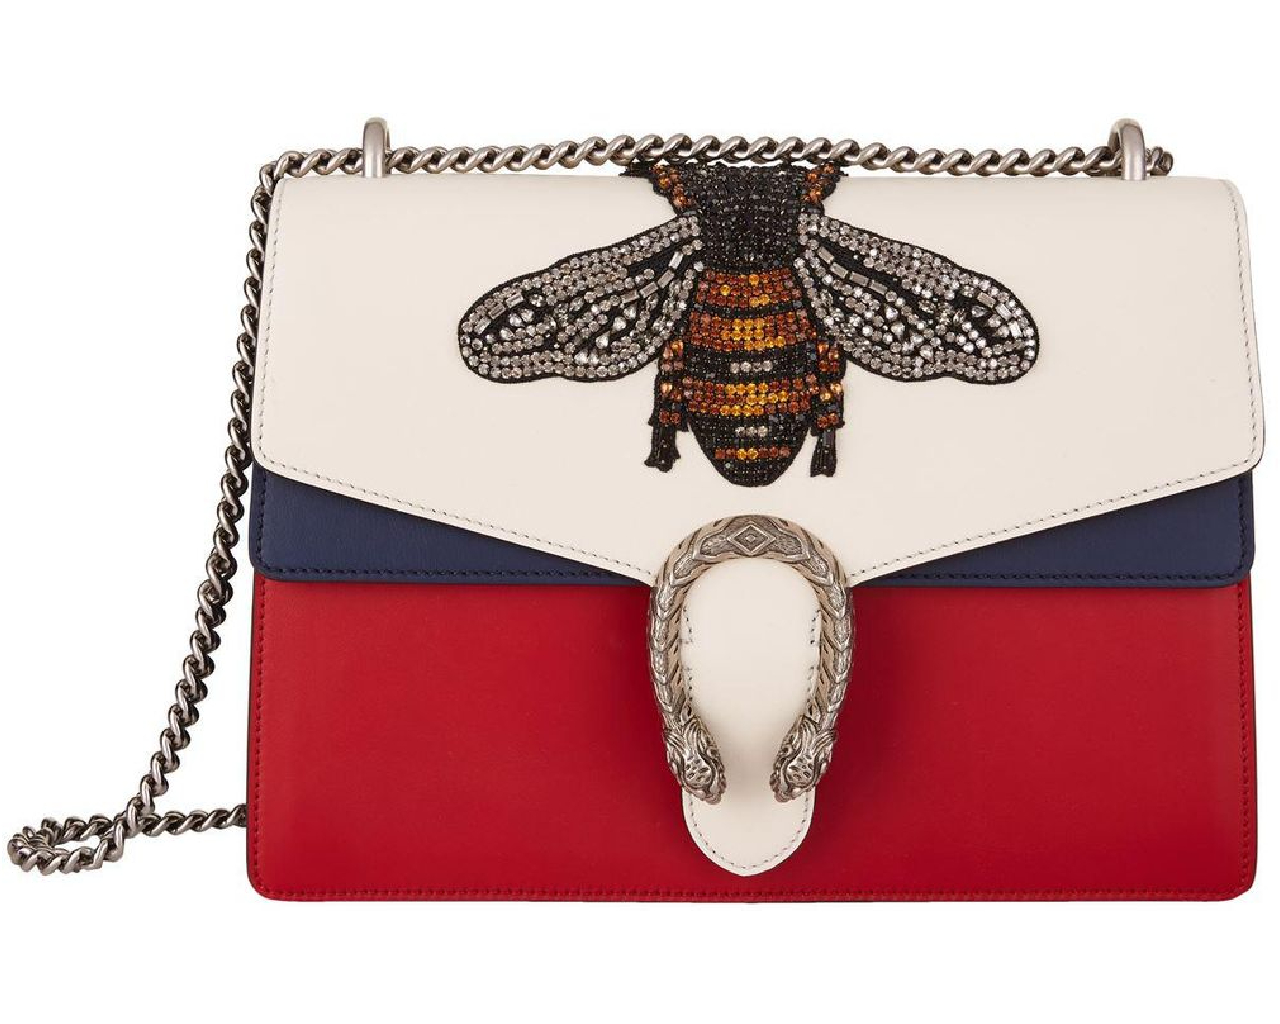 New Handbag Reveal: Gucci Dionysus - The Brunette Nomad